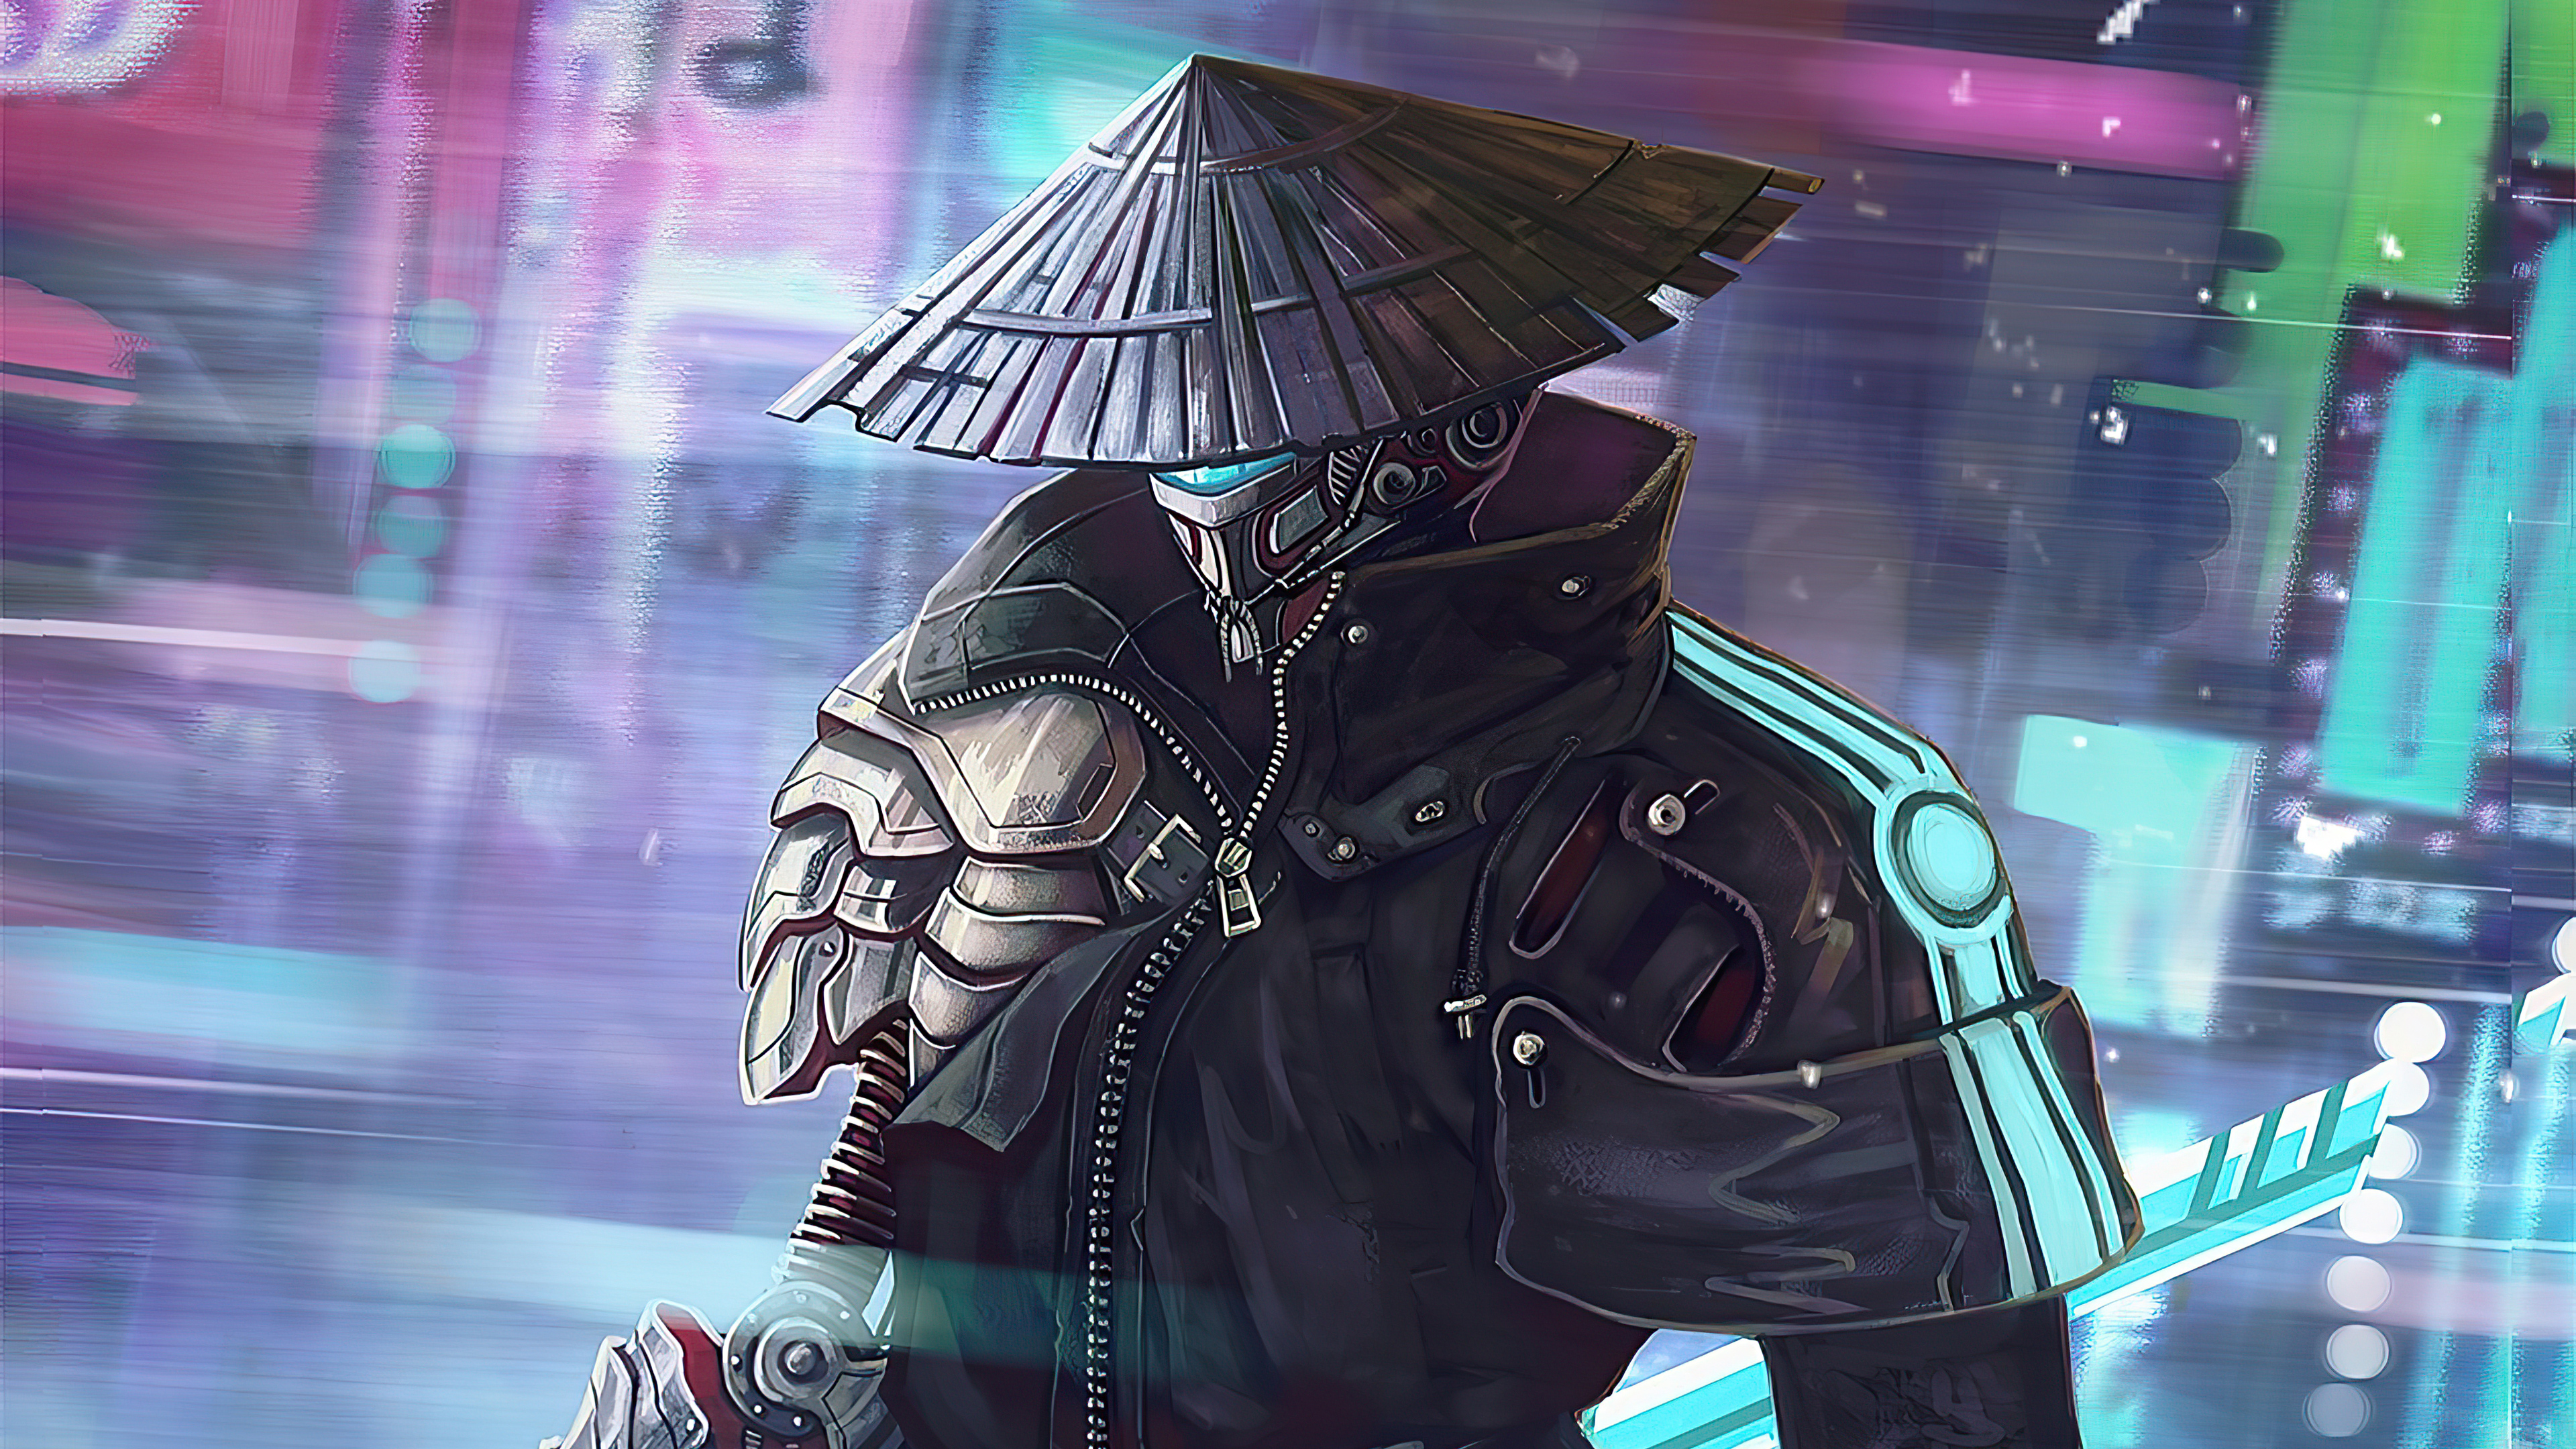 Featured image of post Cyberpunk 2077 Wallpaper 4K Samurai : Desktop and mobile phone wallpaper 4k cyberpunk 2077 samurai logo with search keywords cyberpunk 2077, video game, samurai, logo.